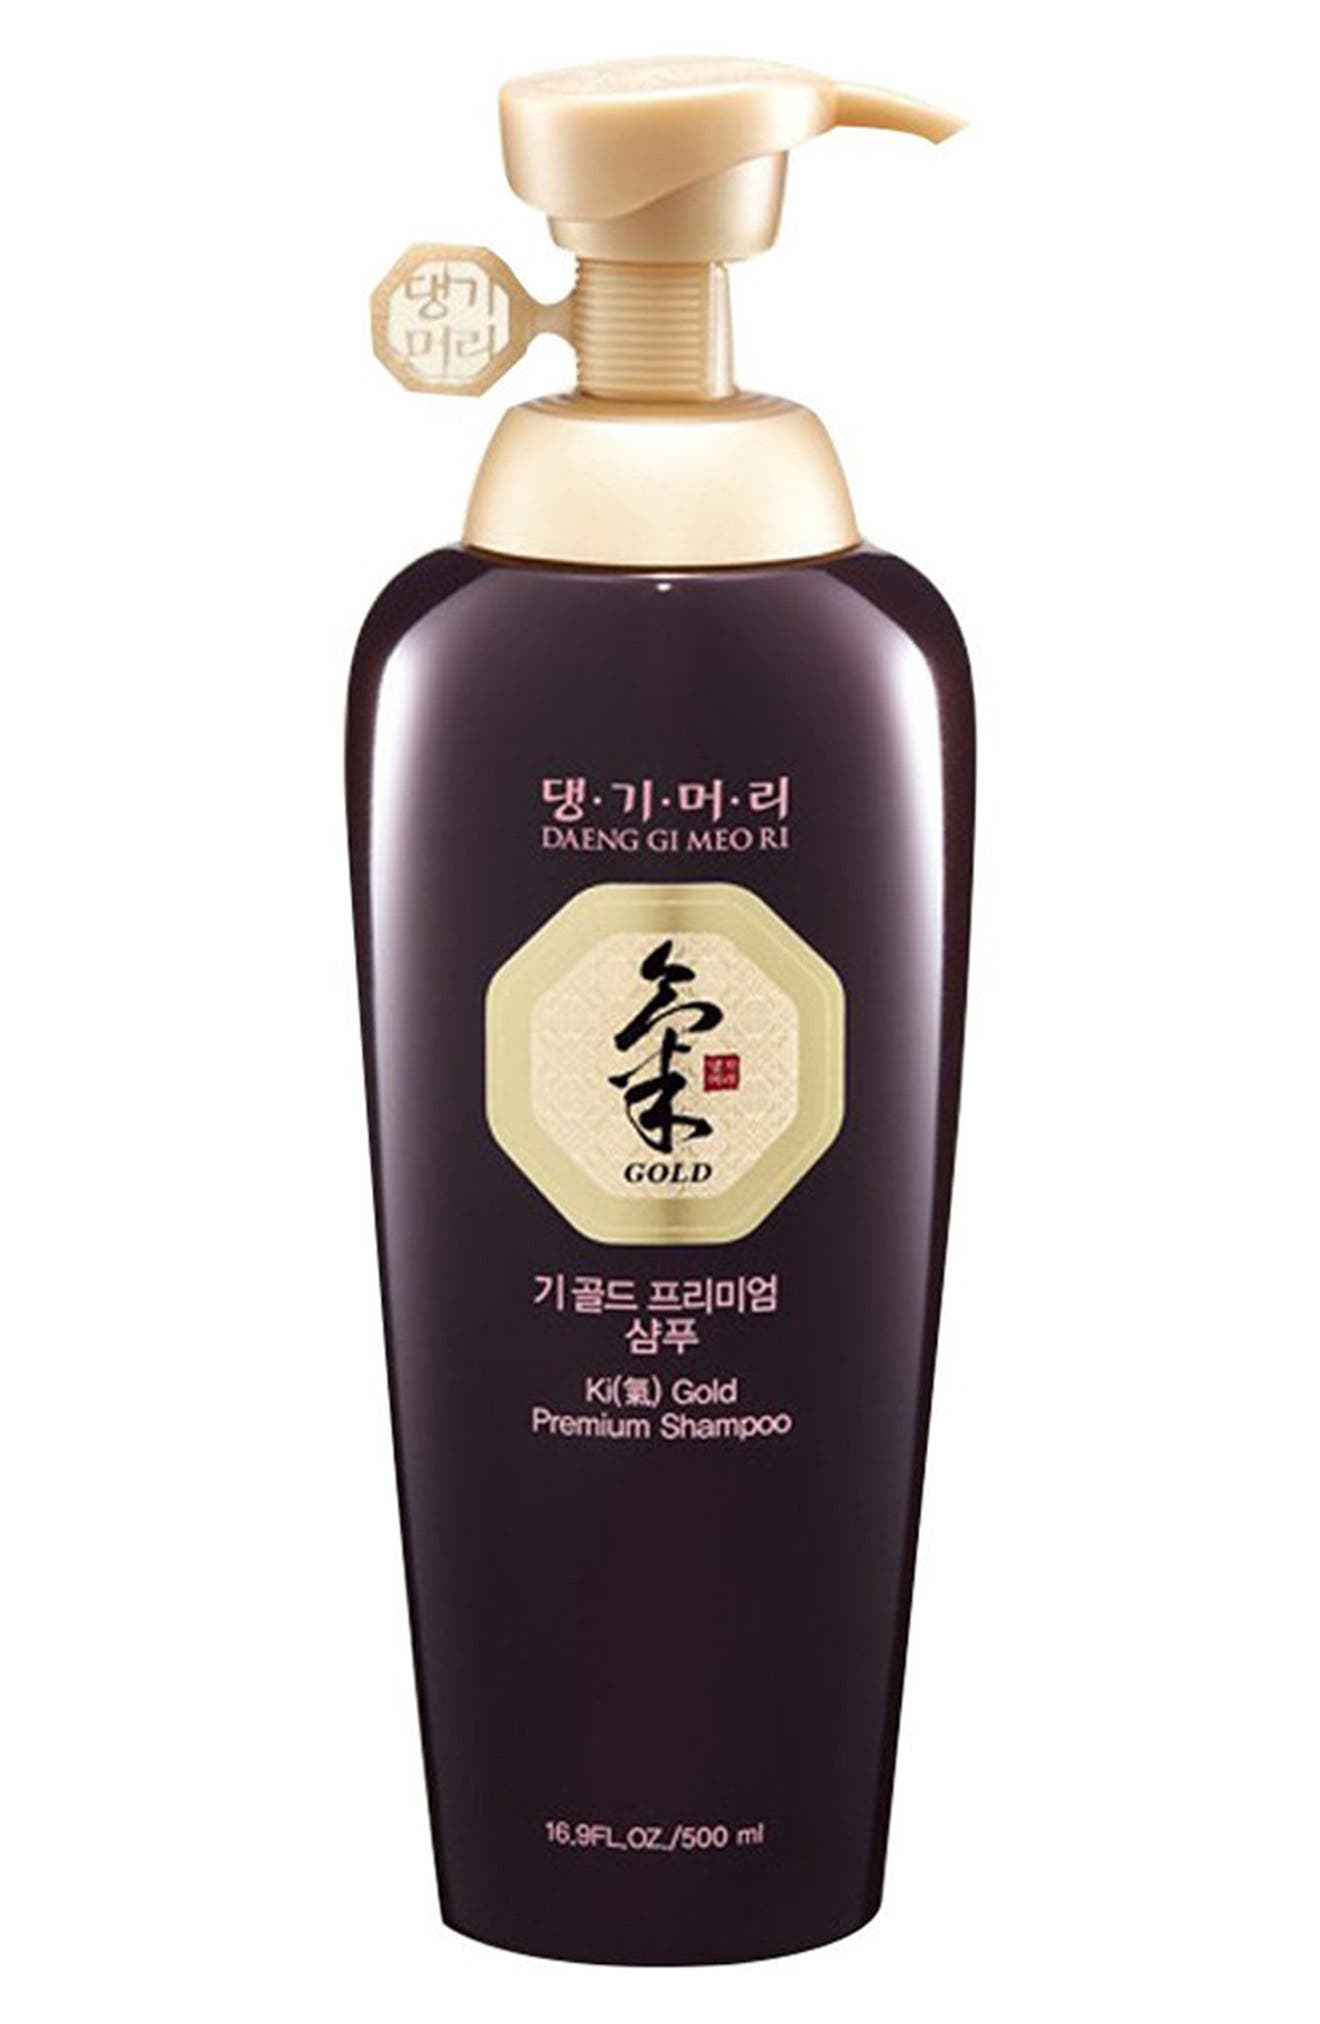 Daeng Gi Meo Ri Ki Gold Premium Shampoo